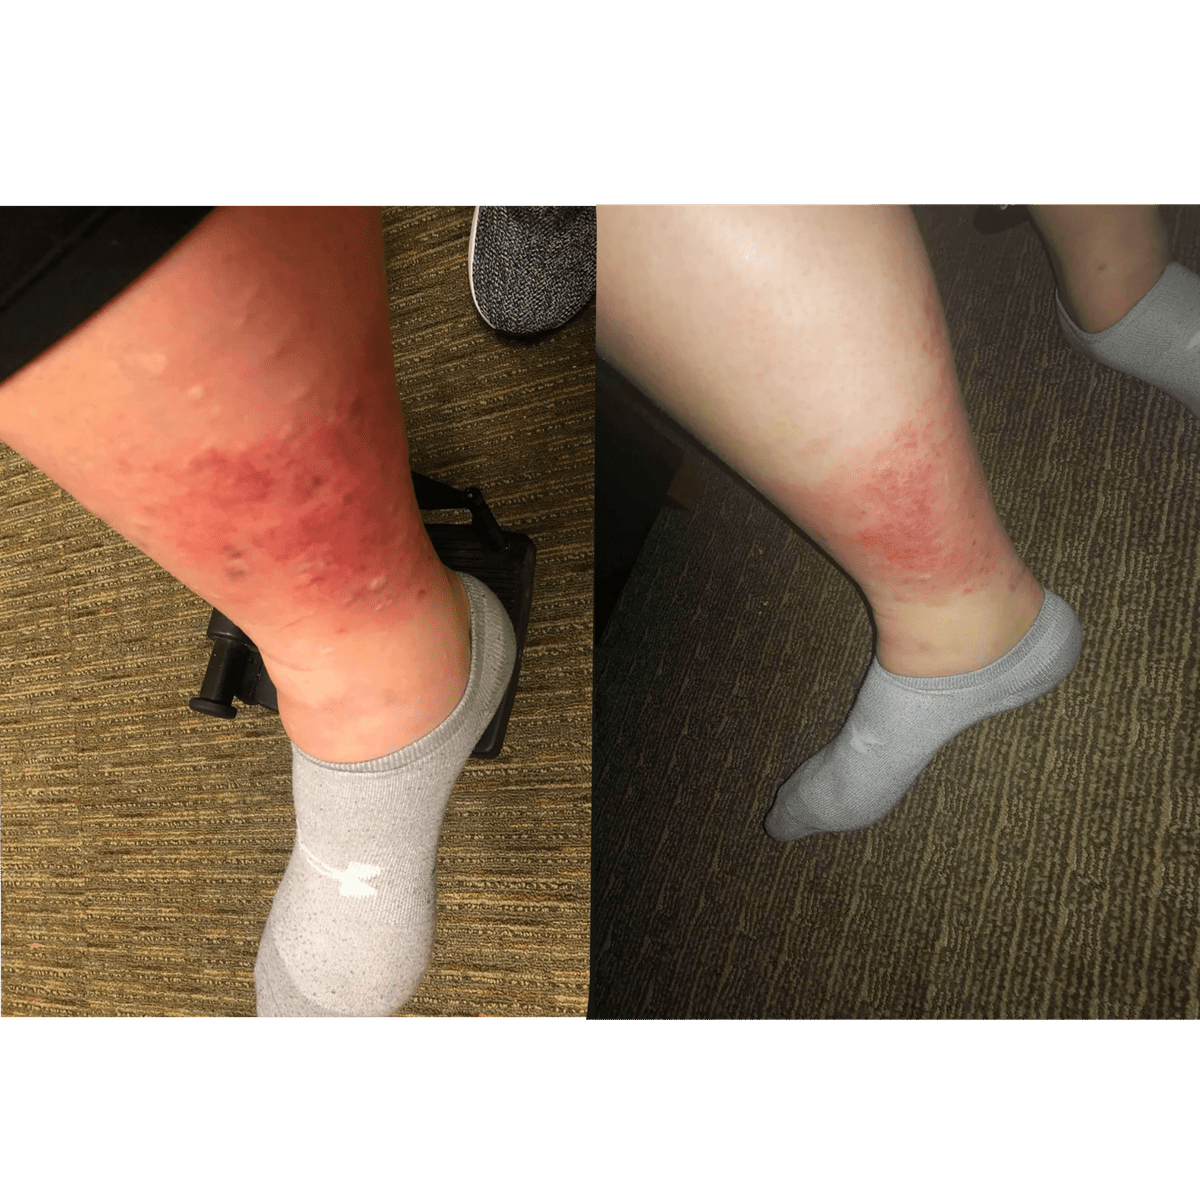 hot-tub-infection hot-tub-rash woman leg health necrosis cellulitis infection